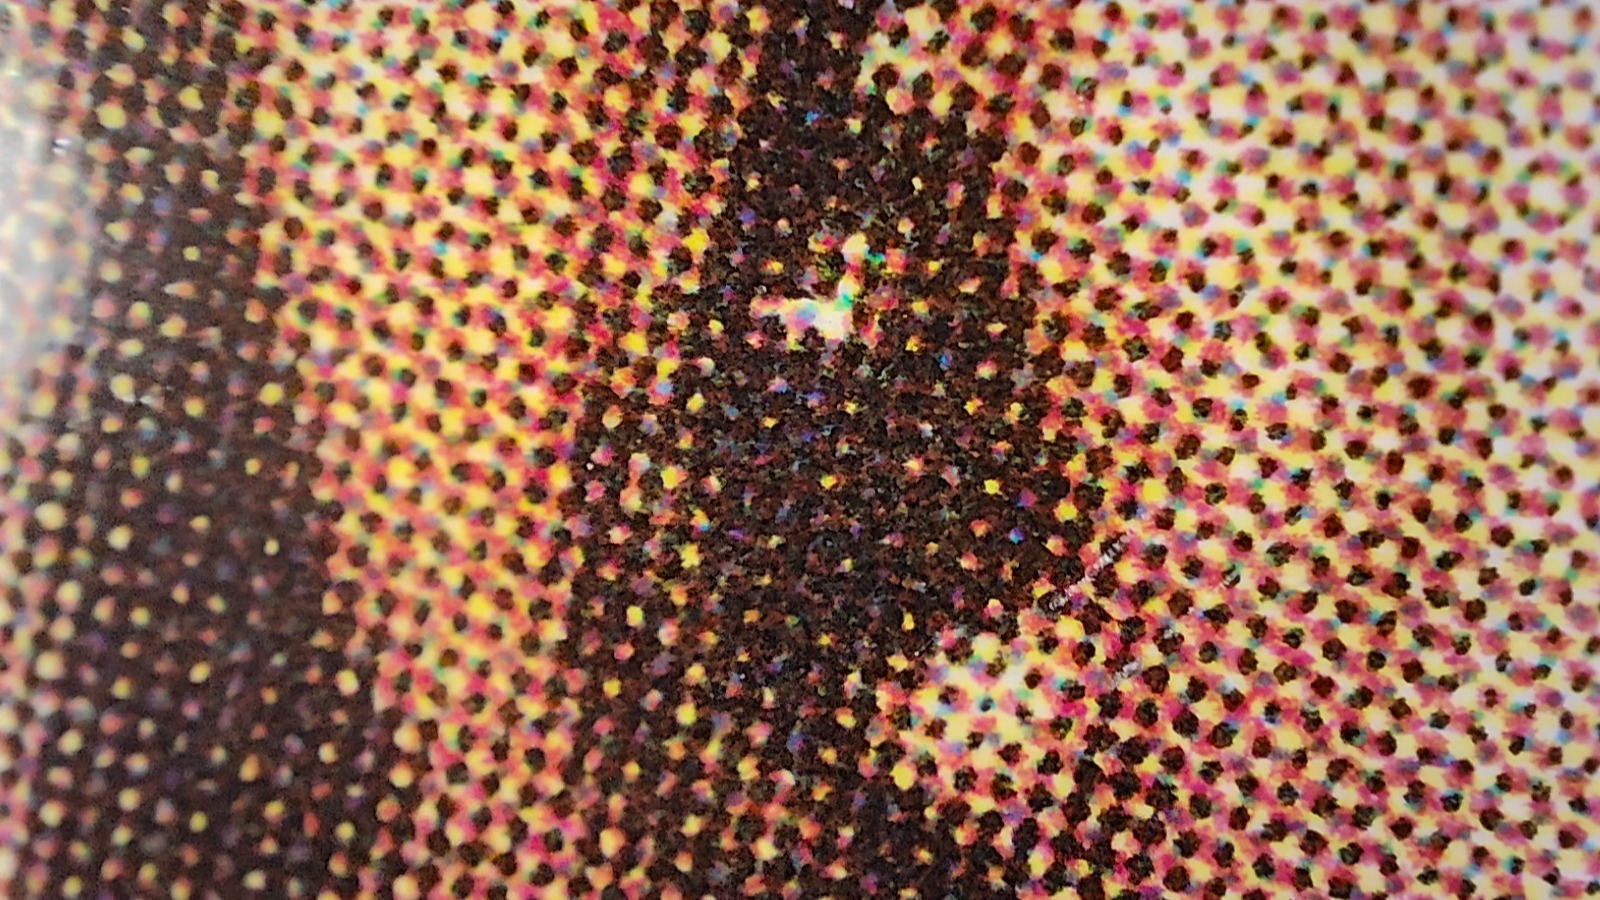 Microscopic photo of a magazine taken using the Realme GT 2 Pro